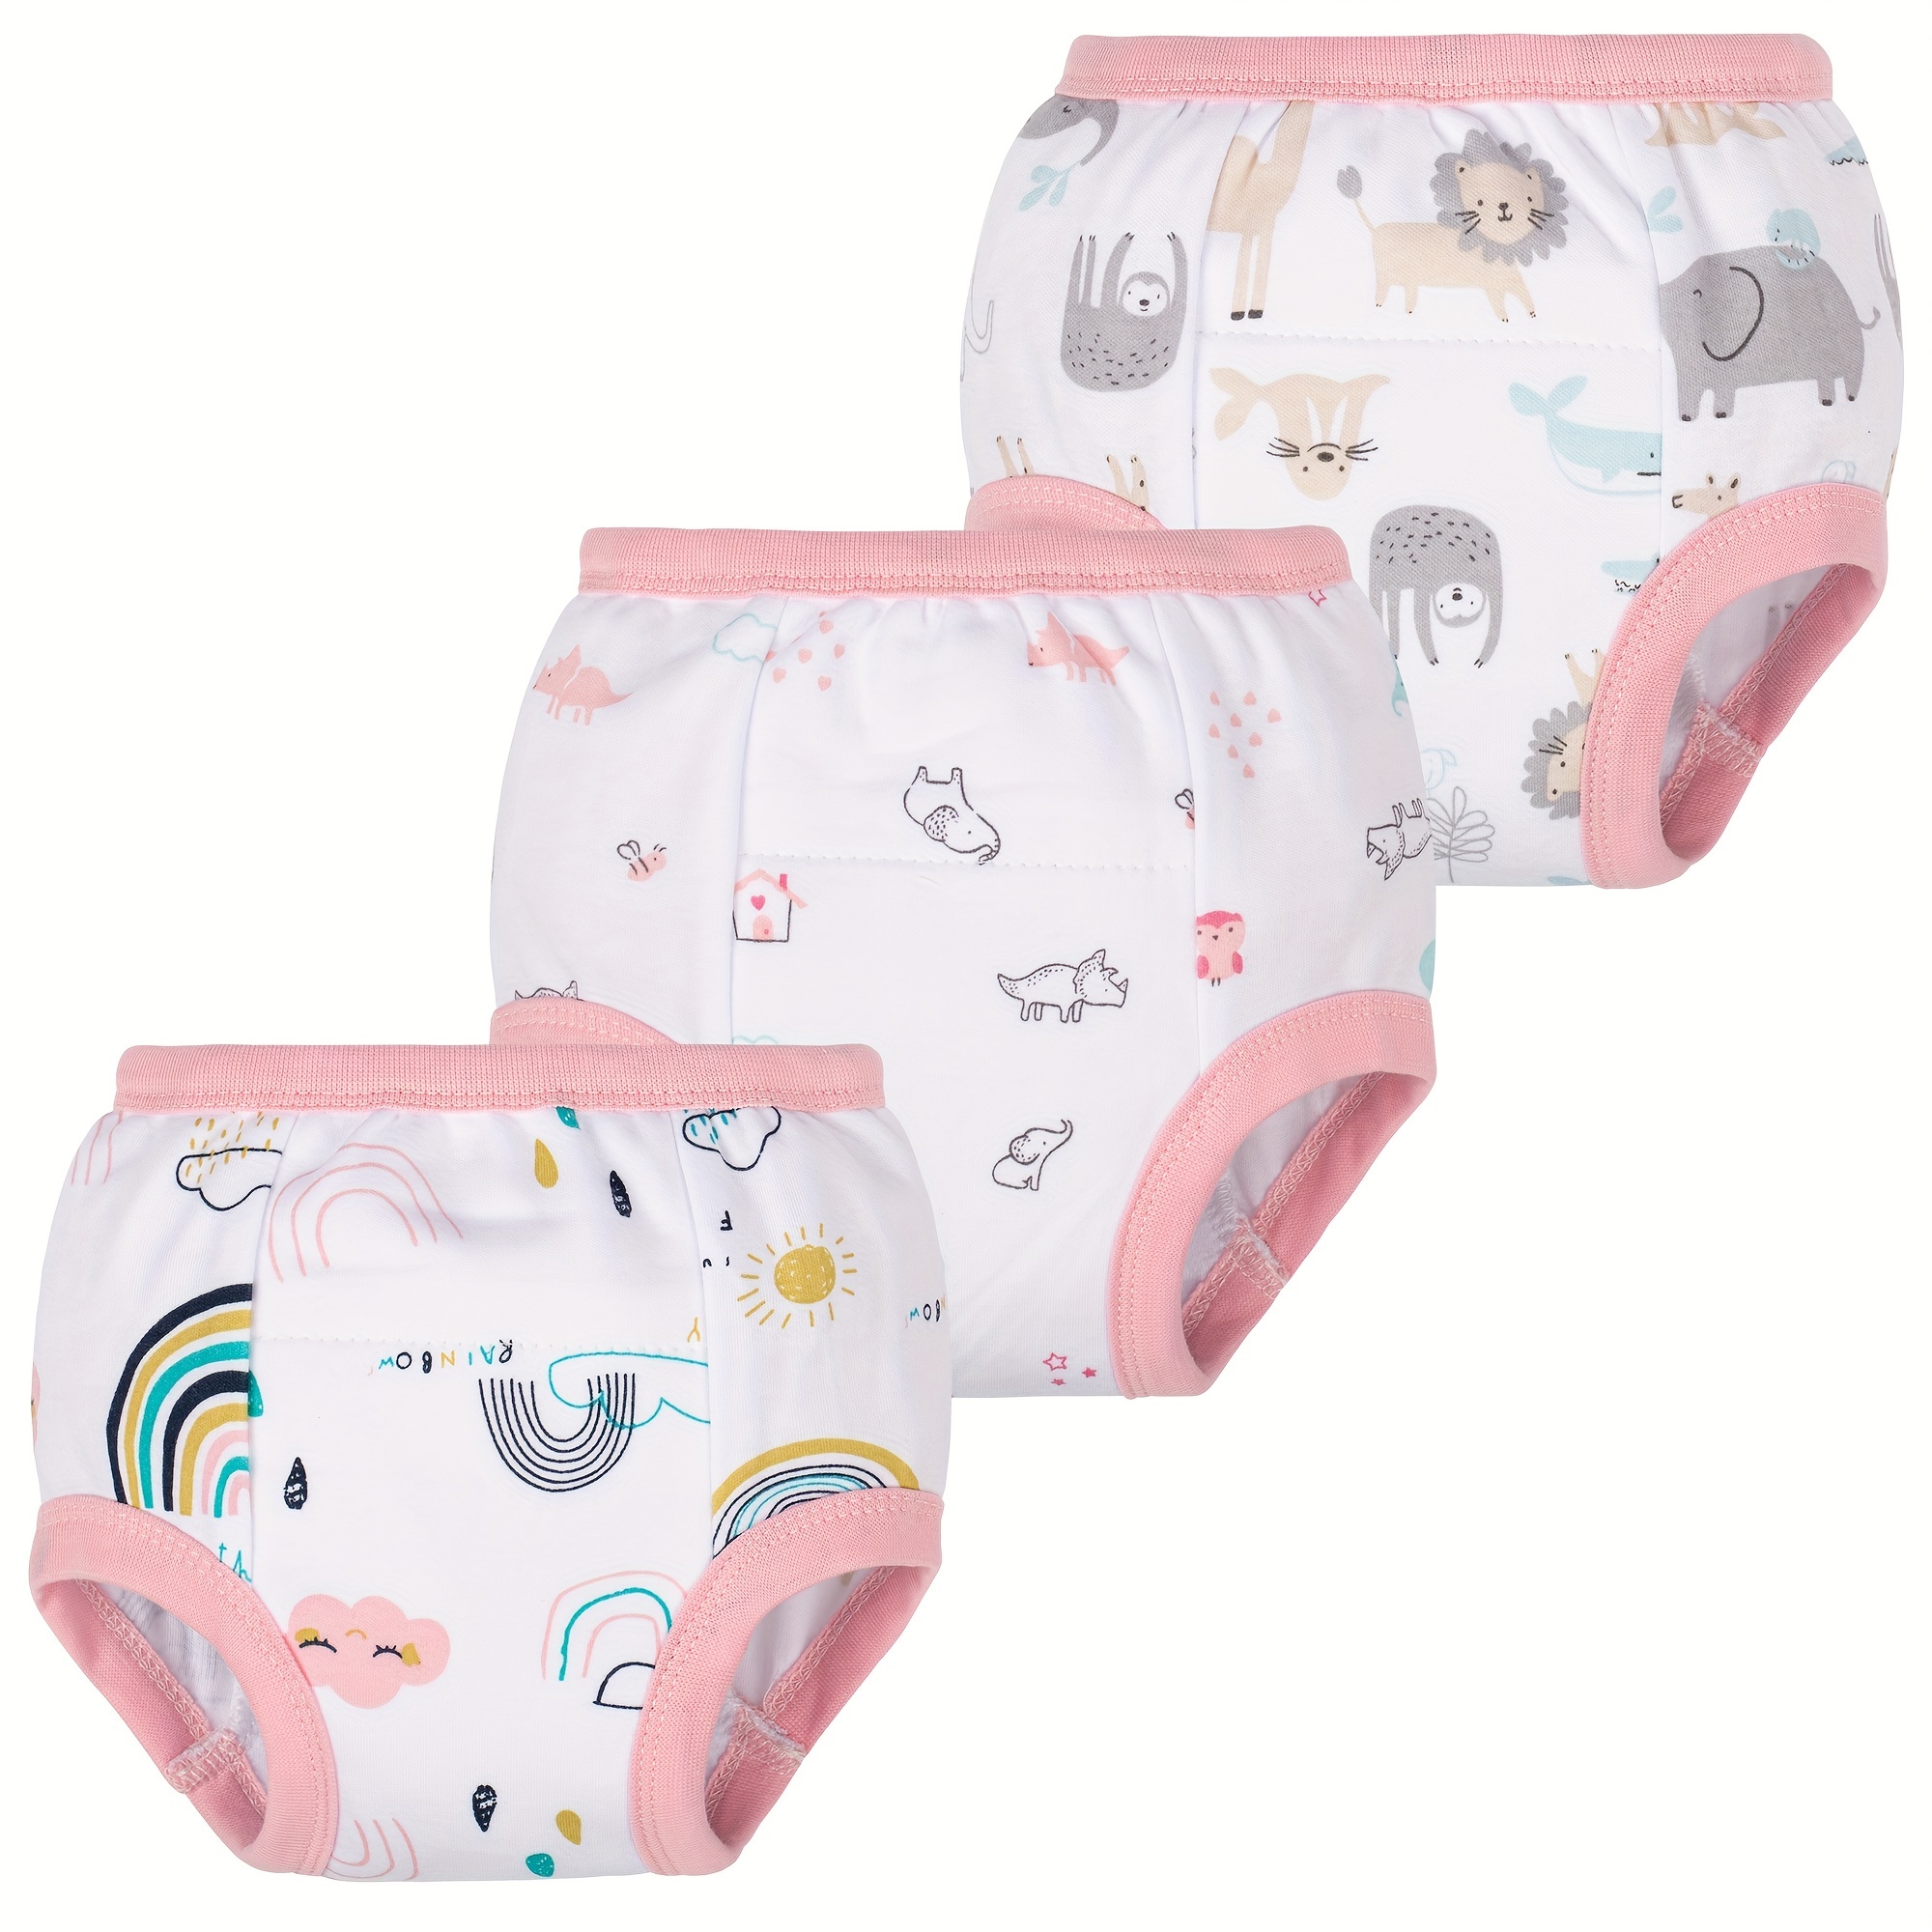 3pcs Reusable Potty Training Pants Baby Kids Boys Girls 6 Layers